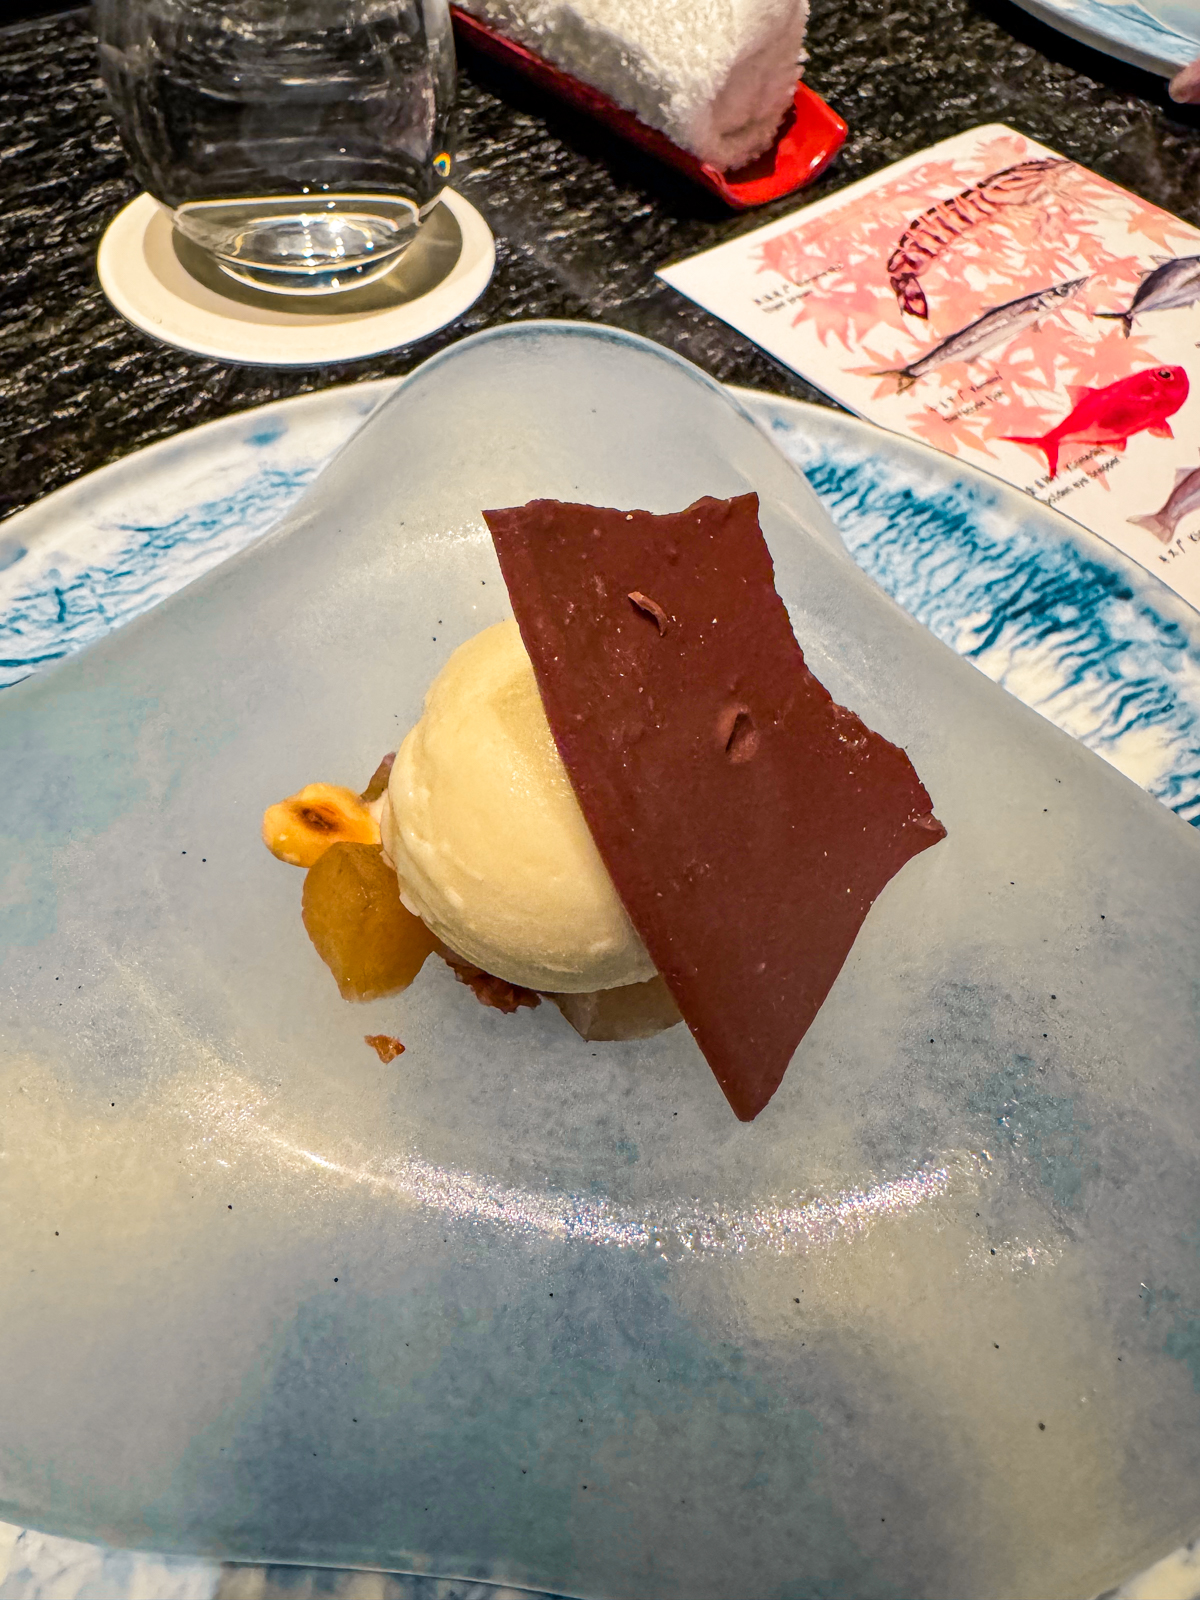 Kinkako ice cream with a piece of chocolate.